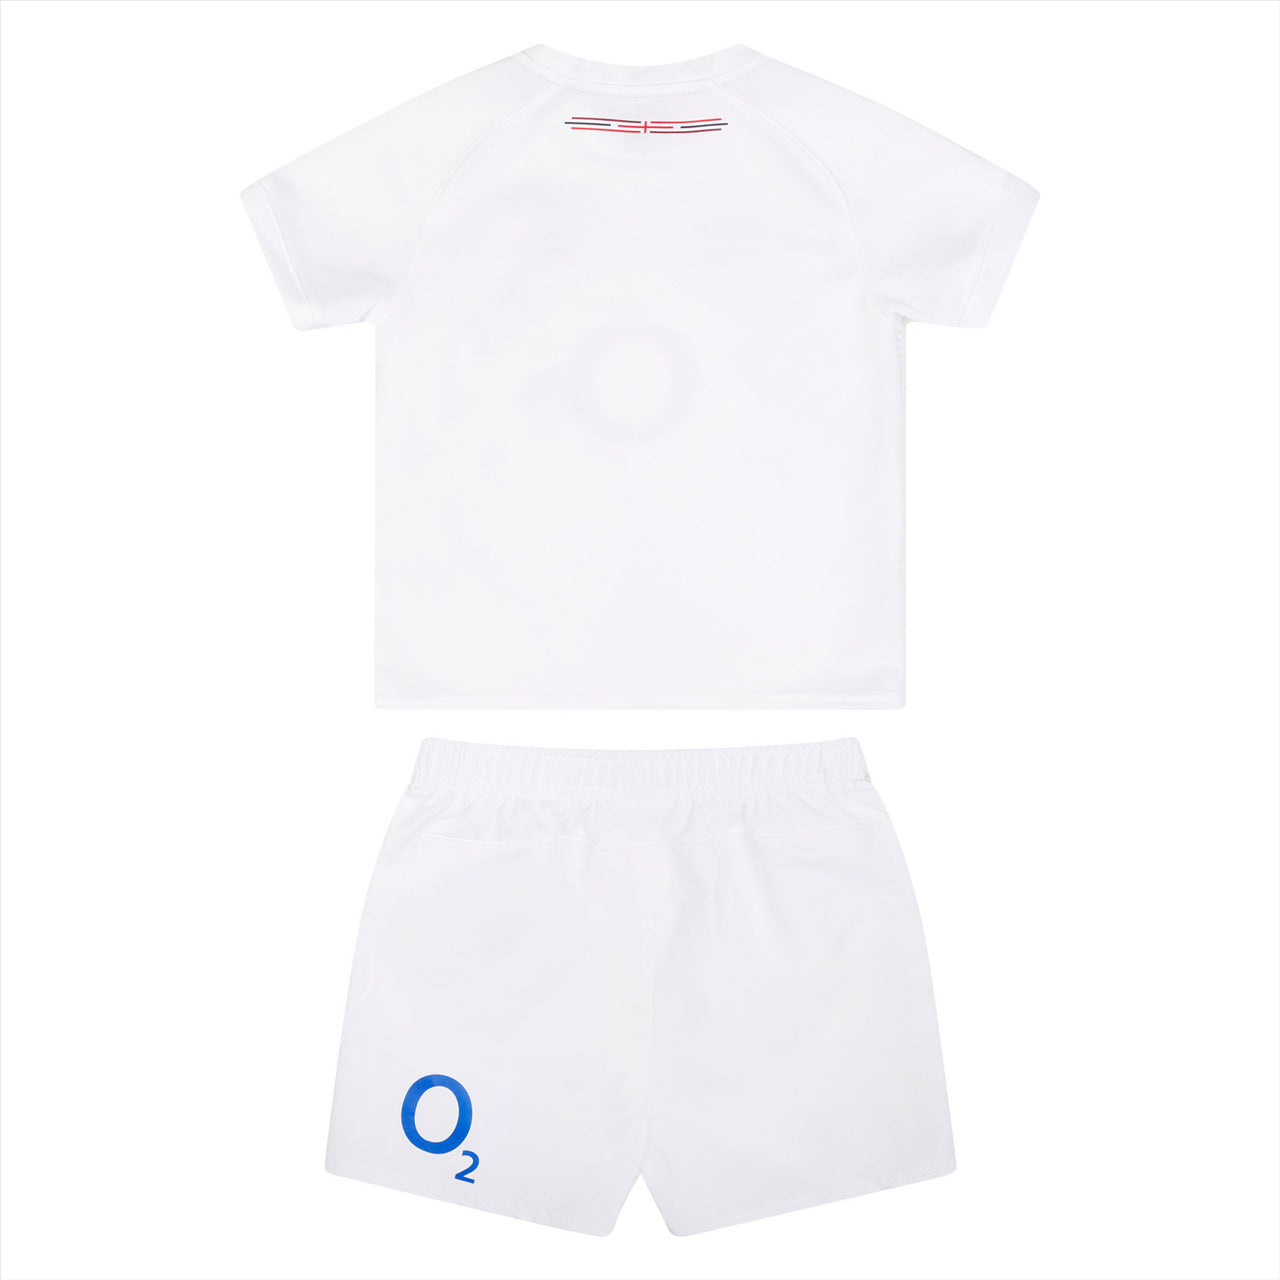 Umbro England Rugby Infants Replica Home Mini Kit | White | 2023/24